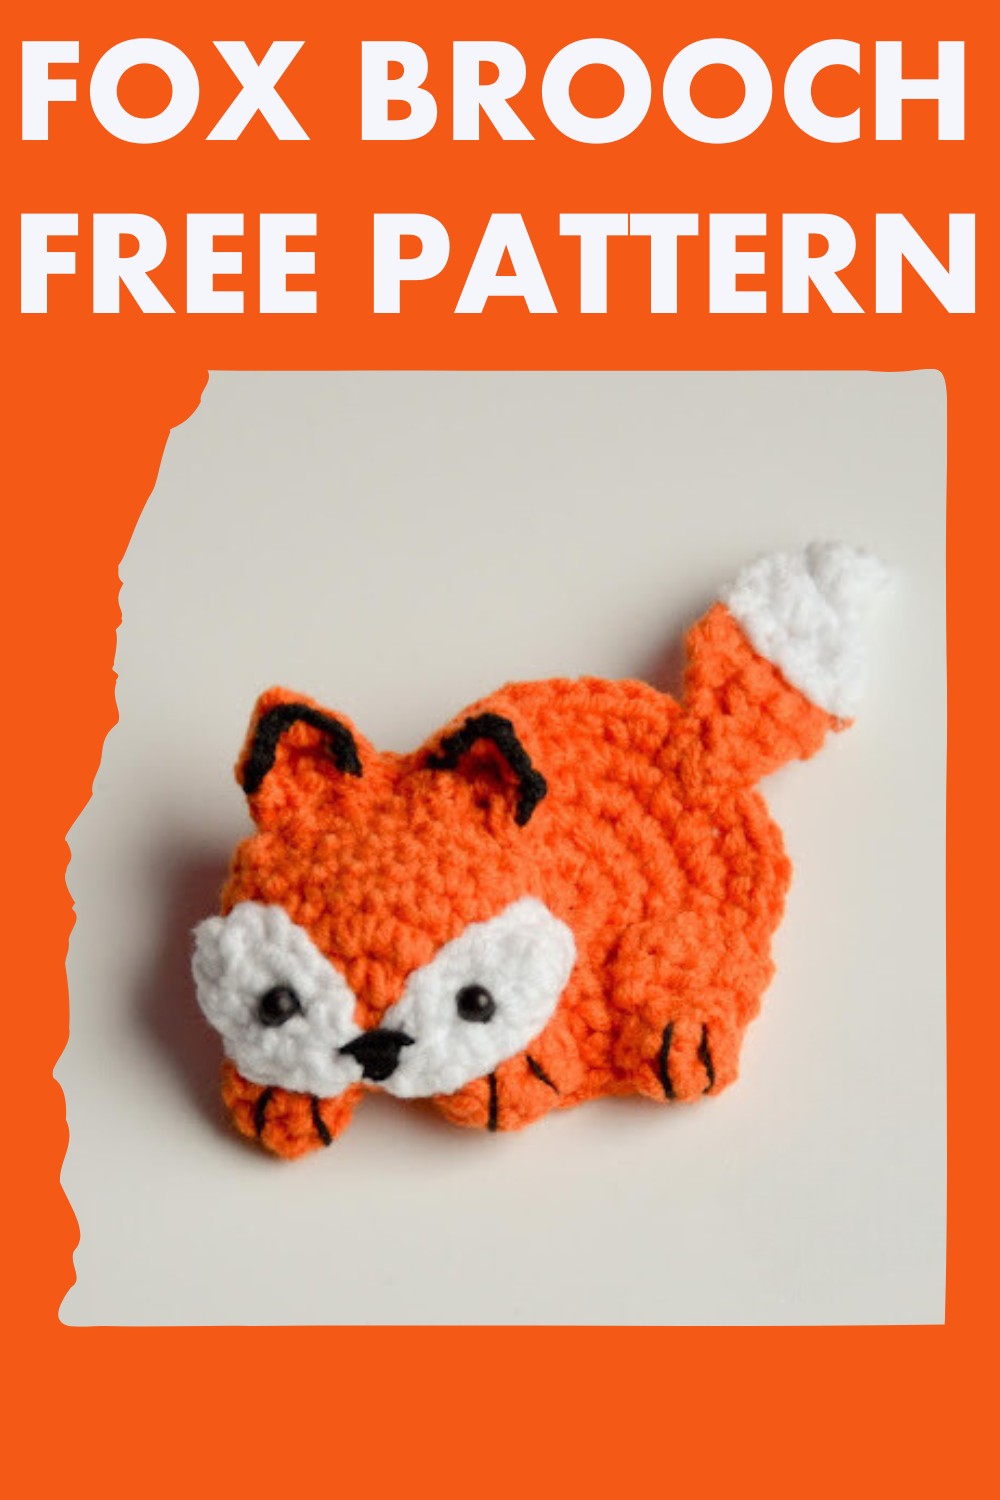 Fox Brooch Free Pattern